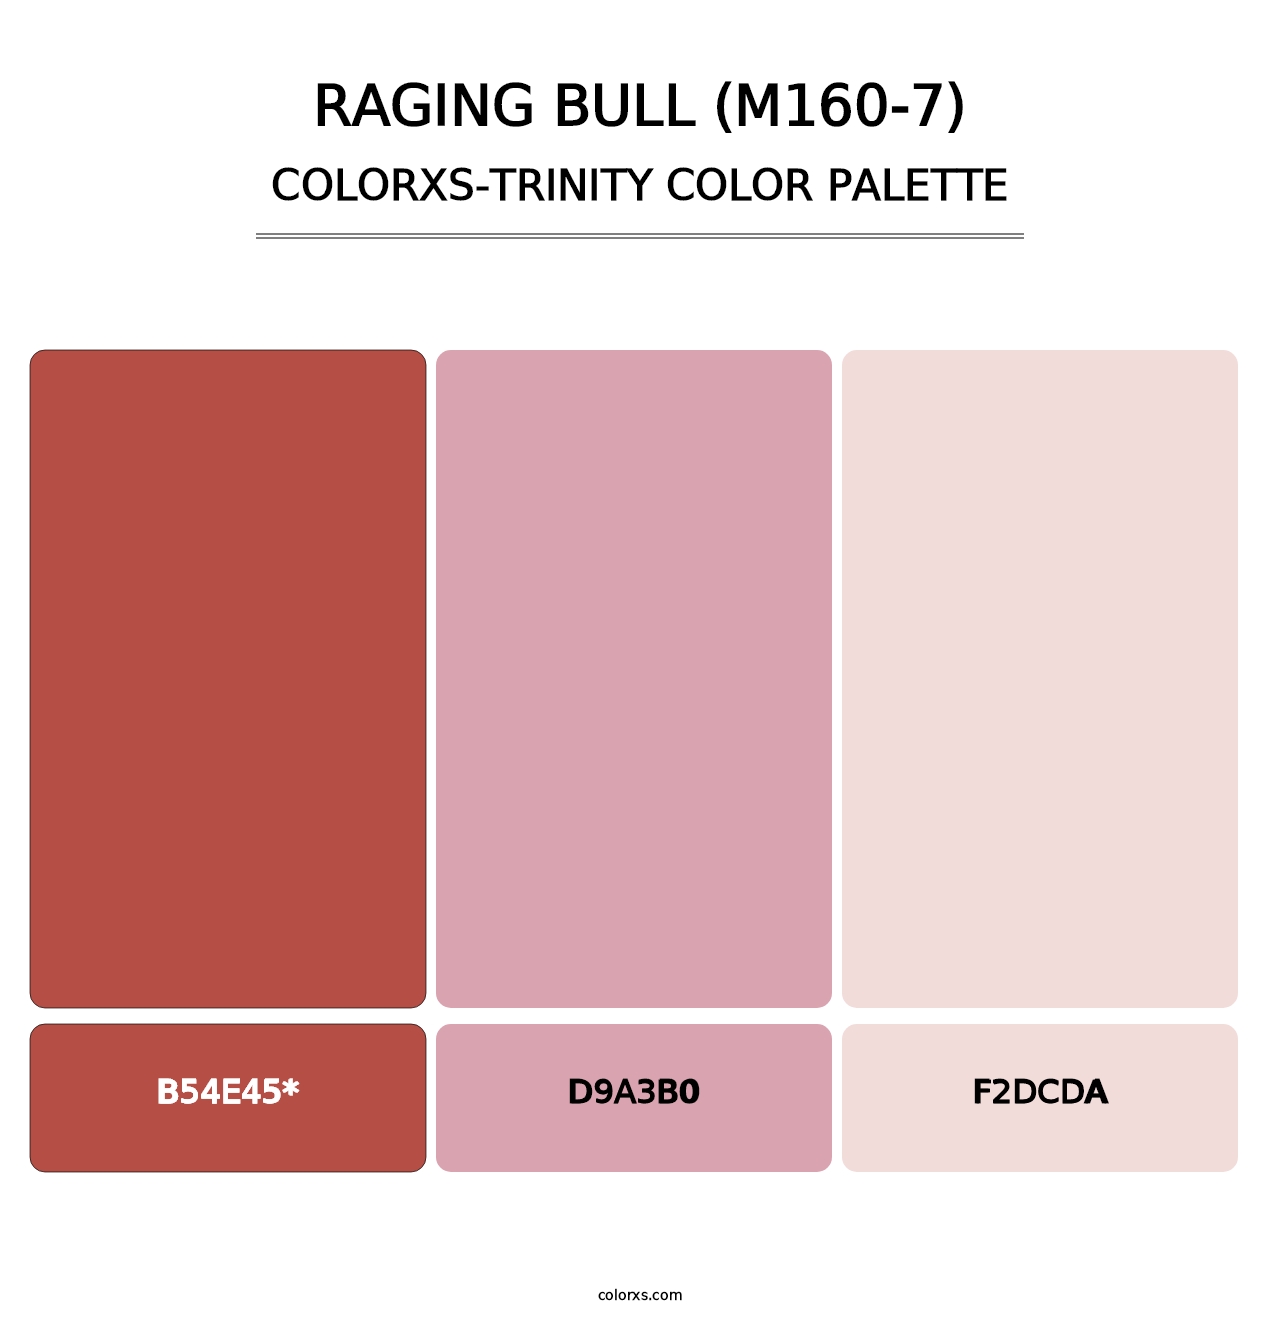 Raging Bull (M160-7) - Colorxs Trinity Palette